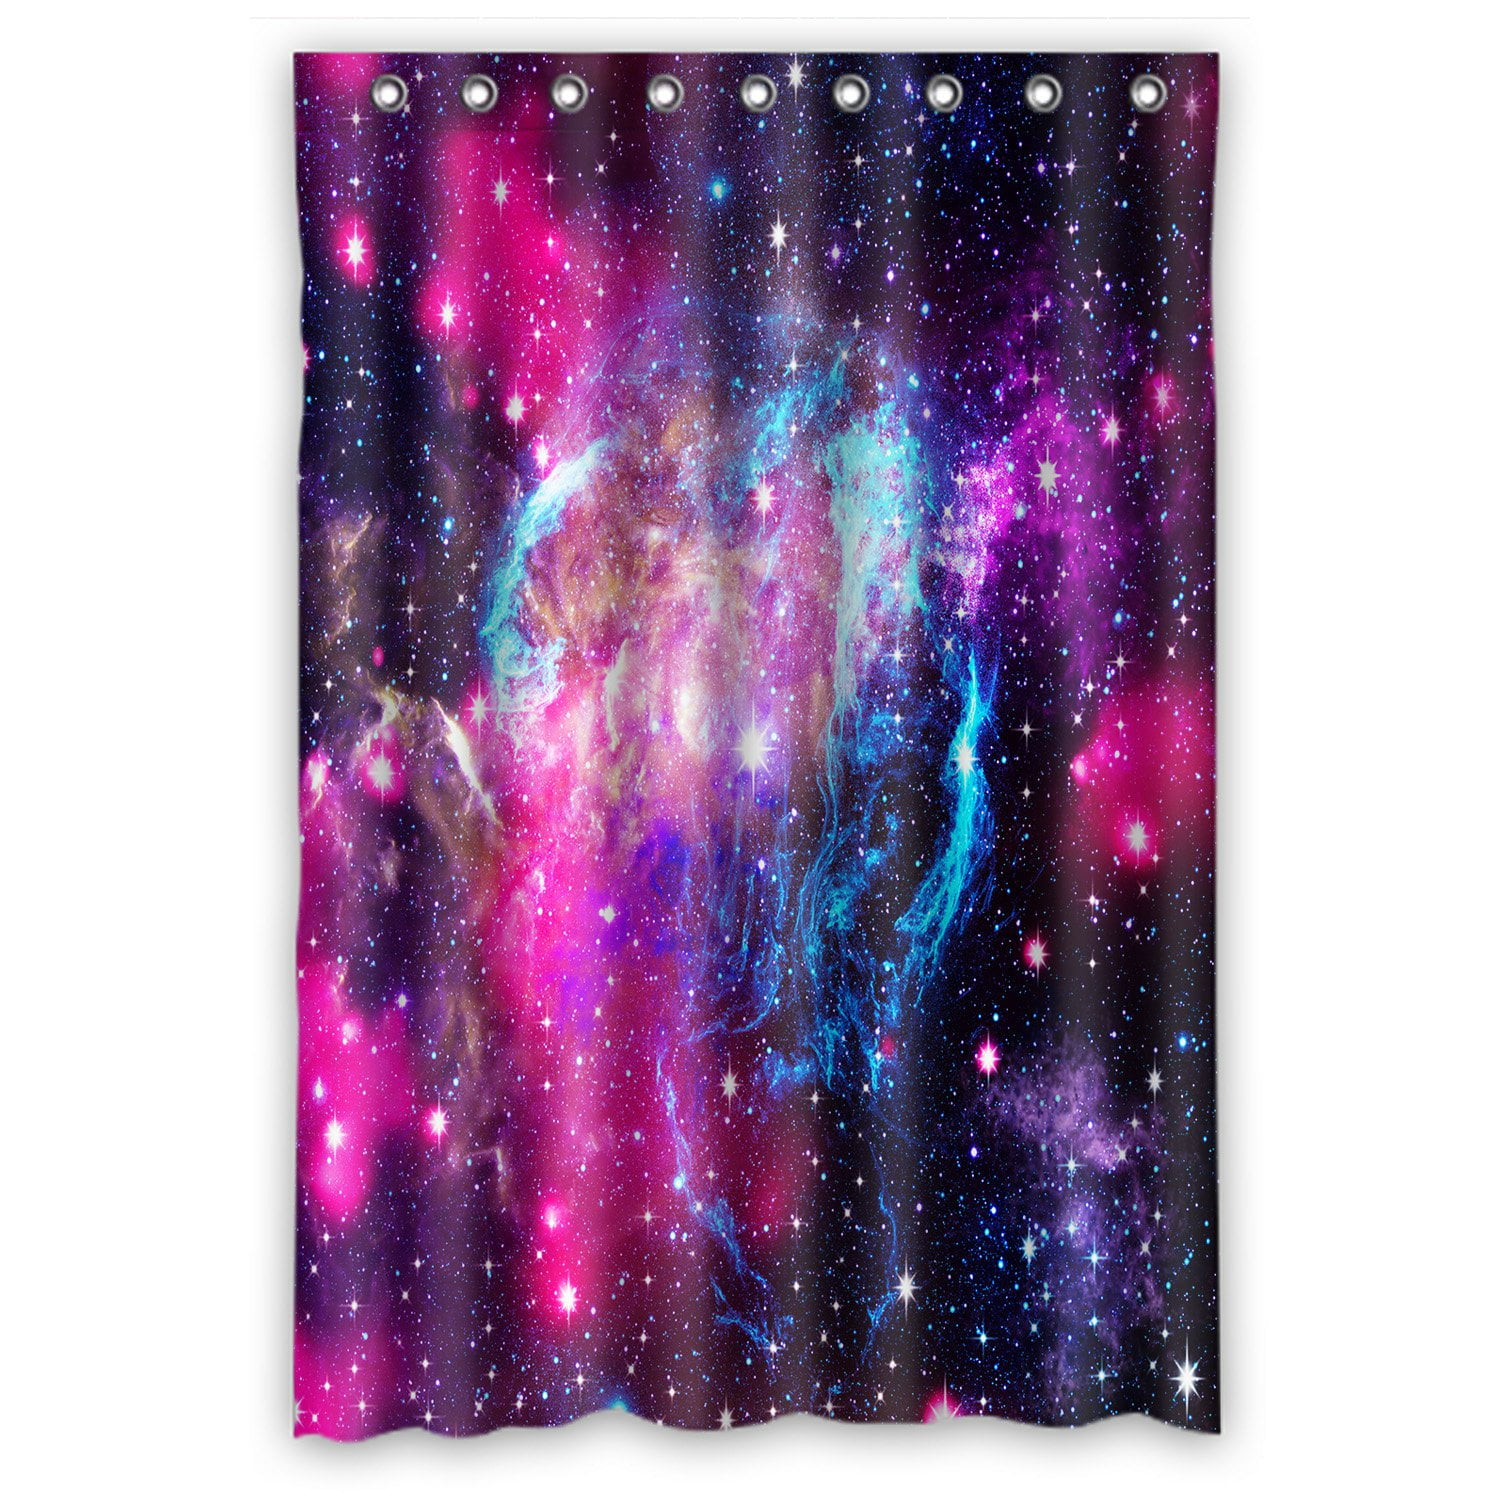 Galaxy Nebula Cat Shower Curtain Bathroom Waterproof Fabric & 12hooks 71*71inch 